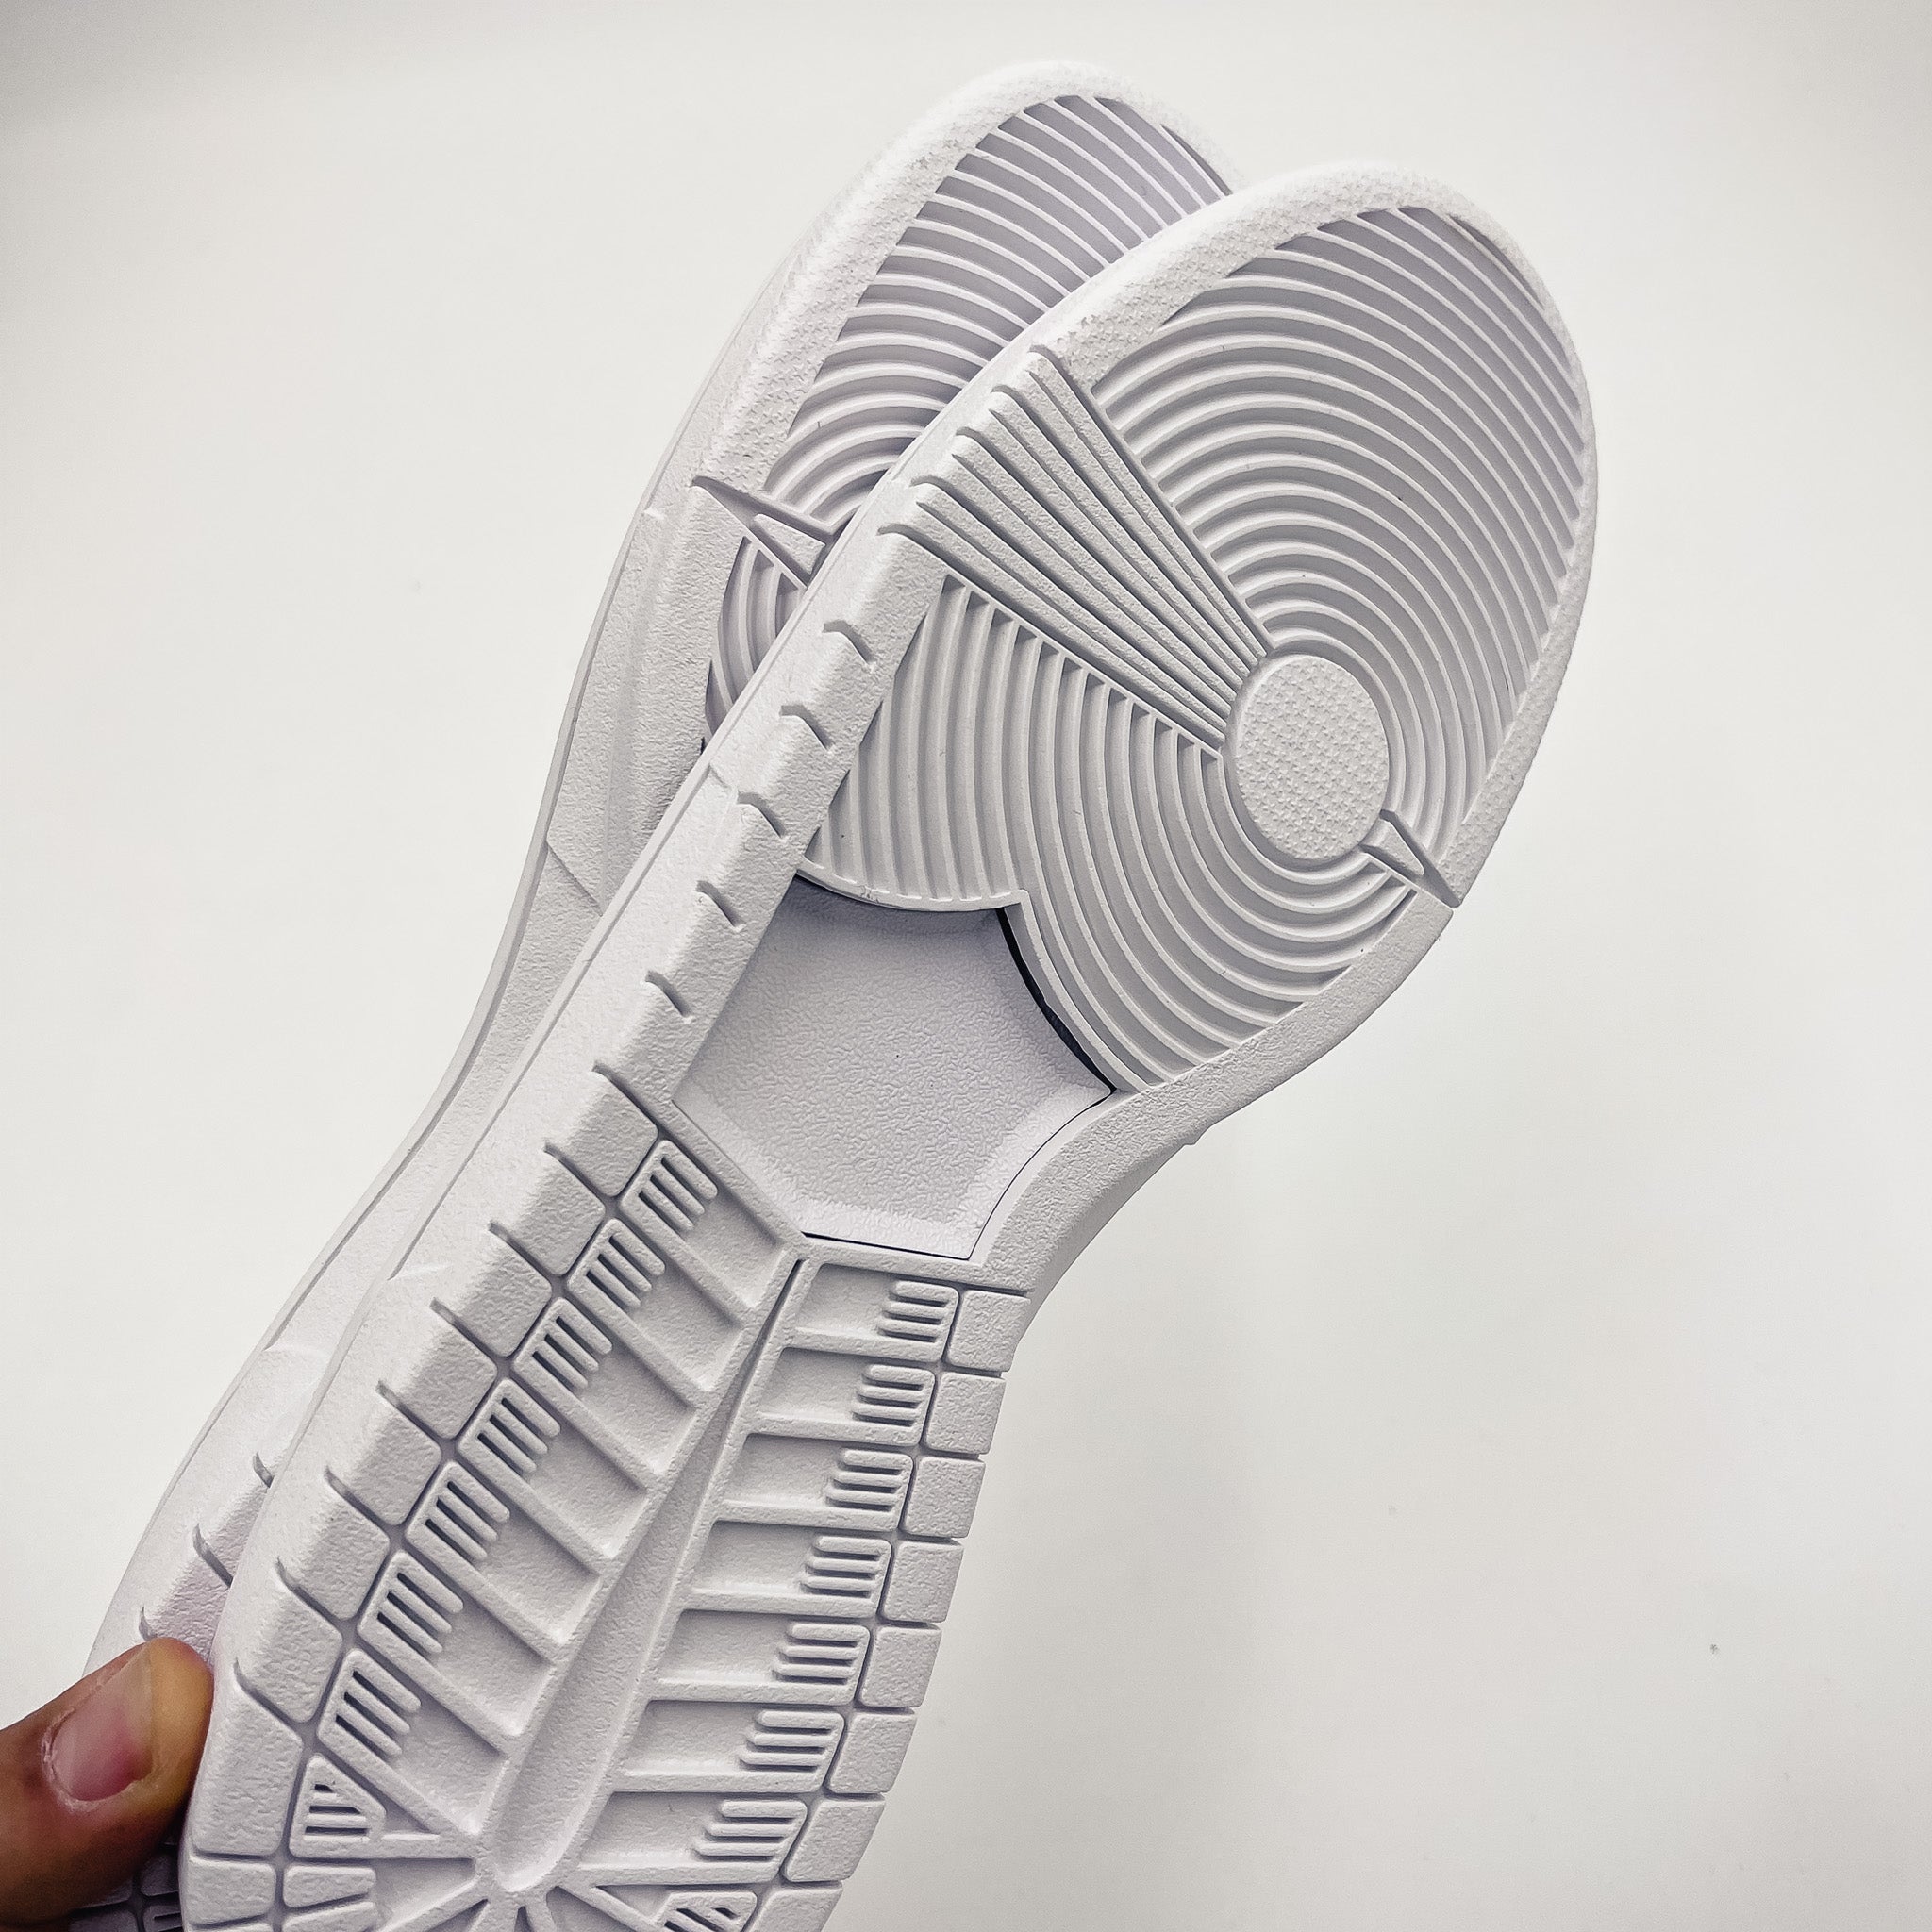 SkateBoard (SB Dunk) Shoe Soles, White